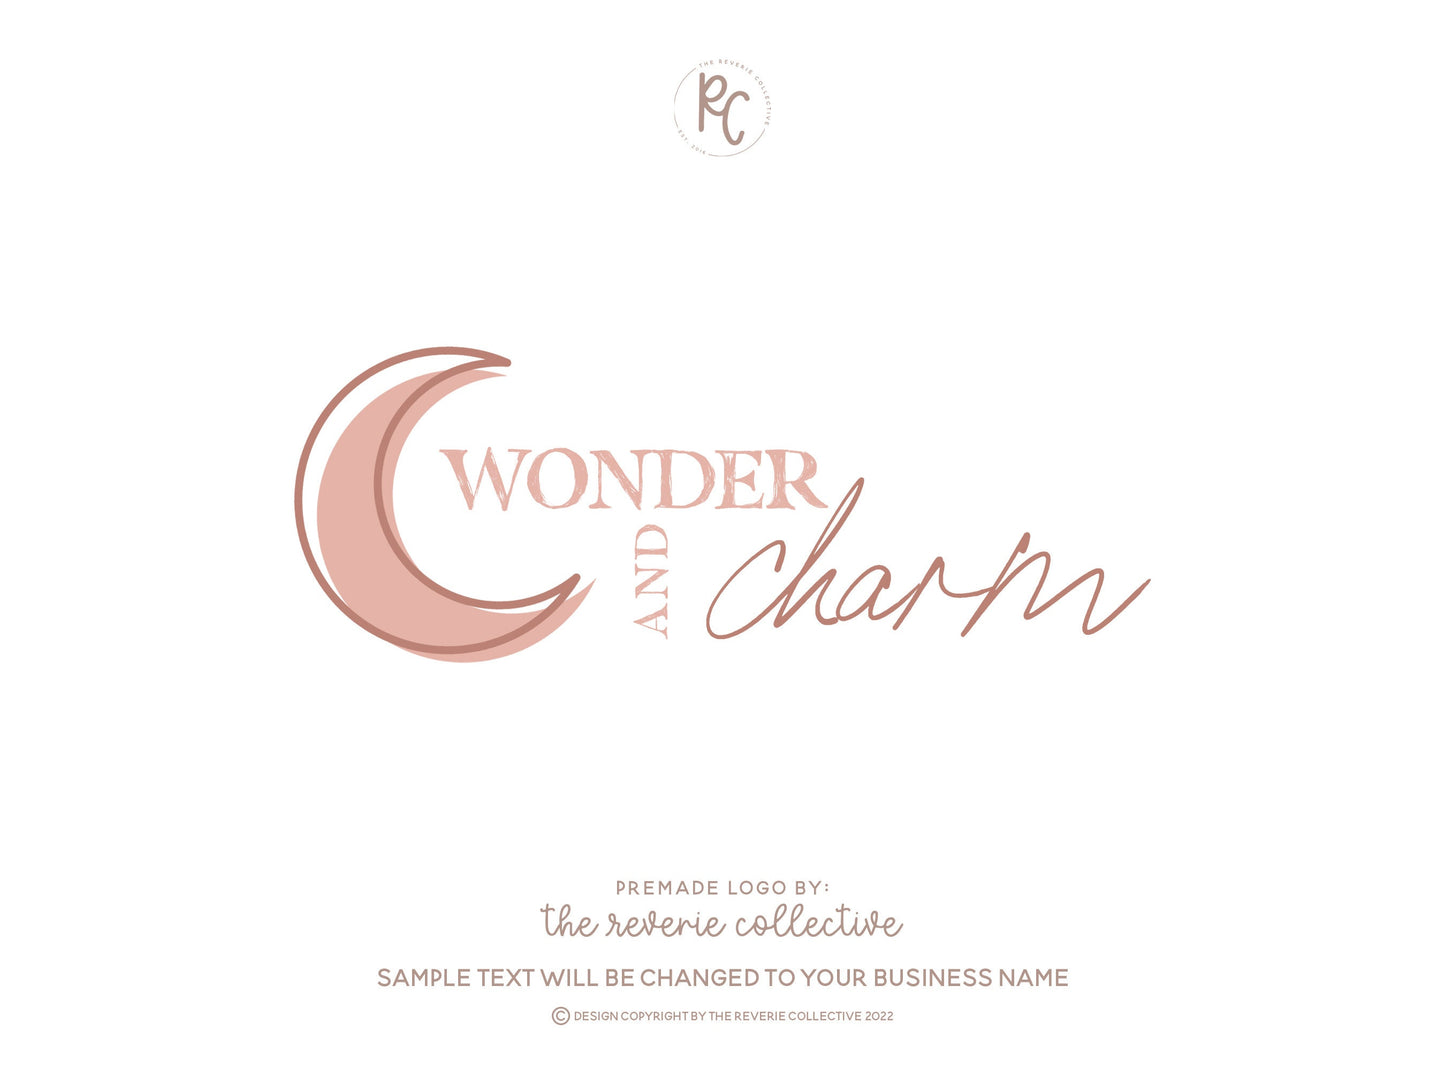 Wonder and Charm | Premade Logo Design | Crescent Moon, Bohemian, Magical